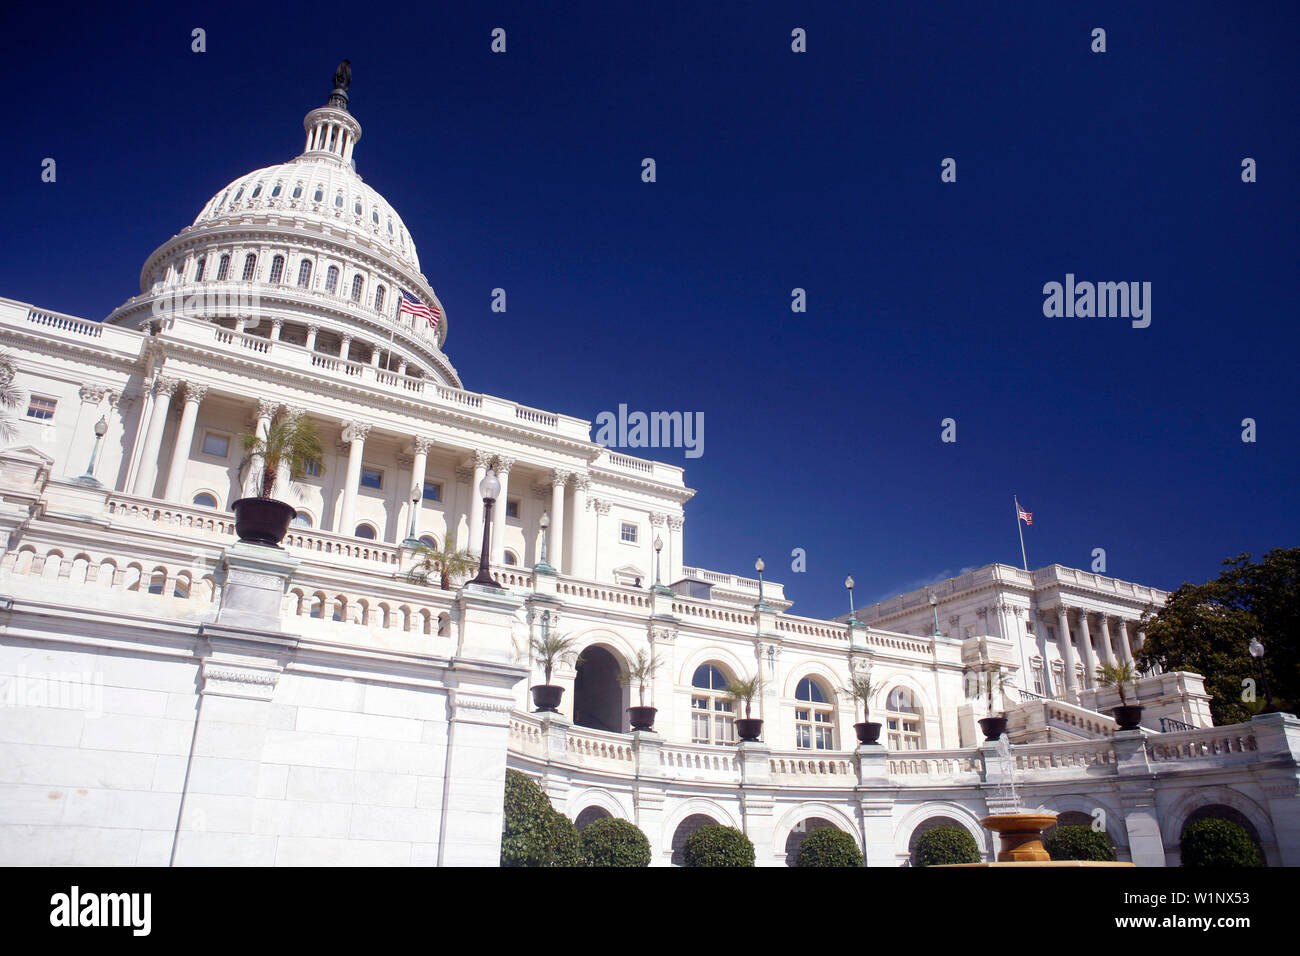 United States Capitol, the United States Congress, the legislative branch of the U.S. federal government, Washington DC, United States, USA Stock Photo